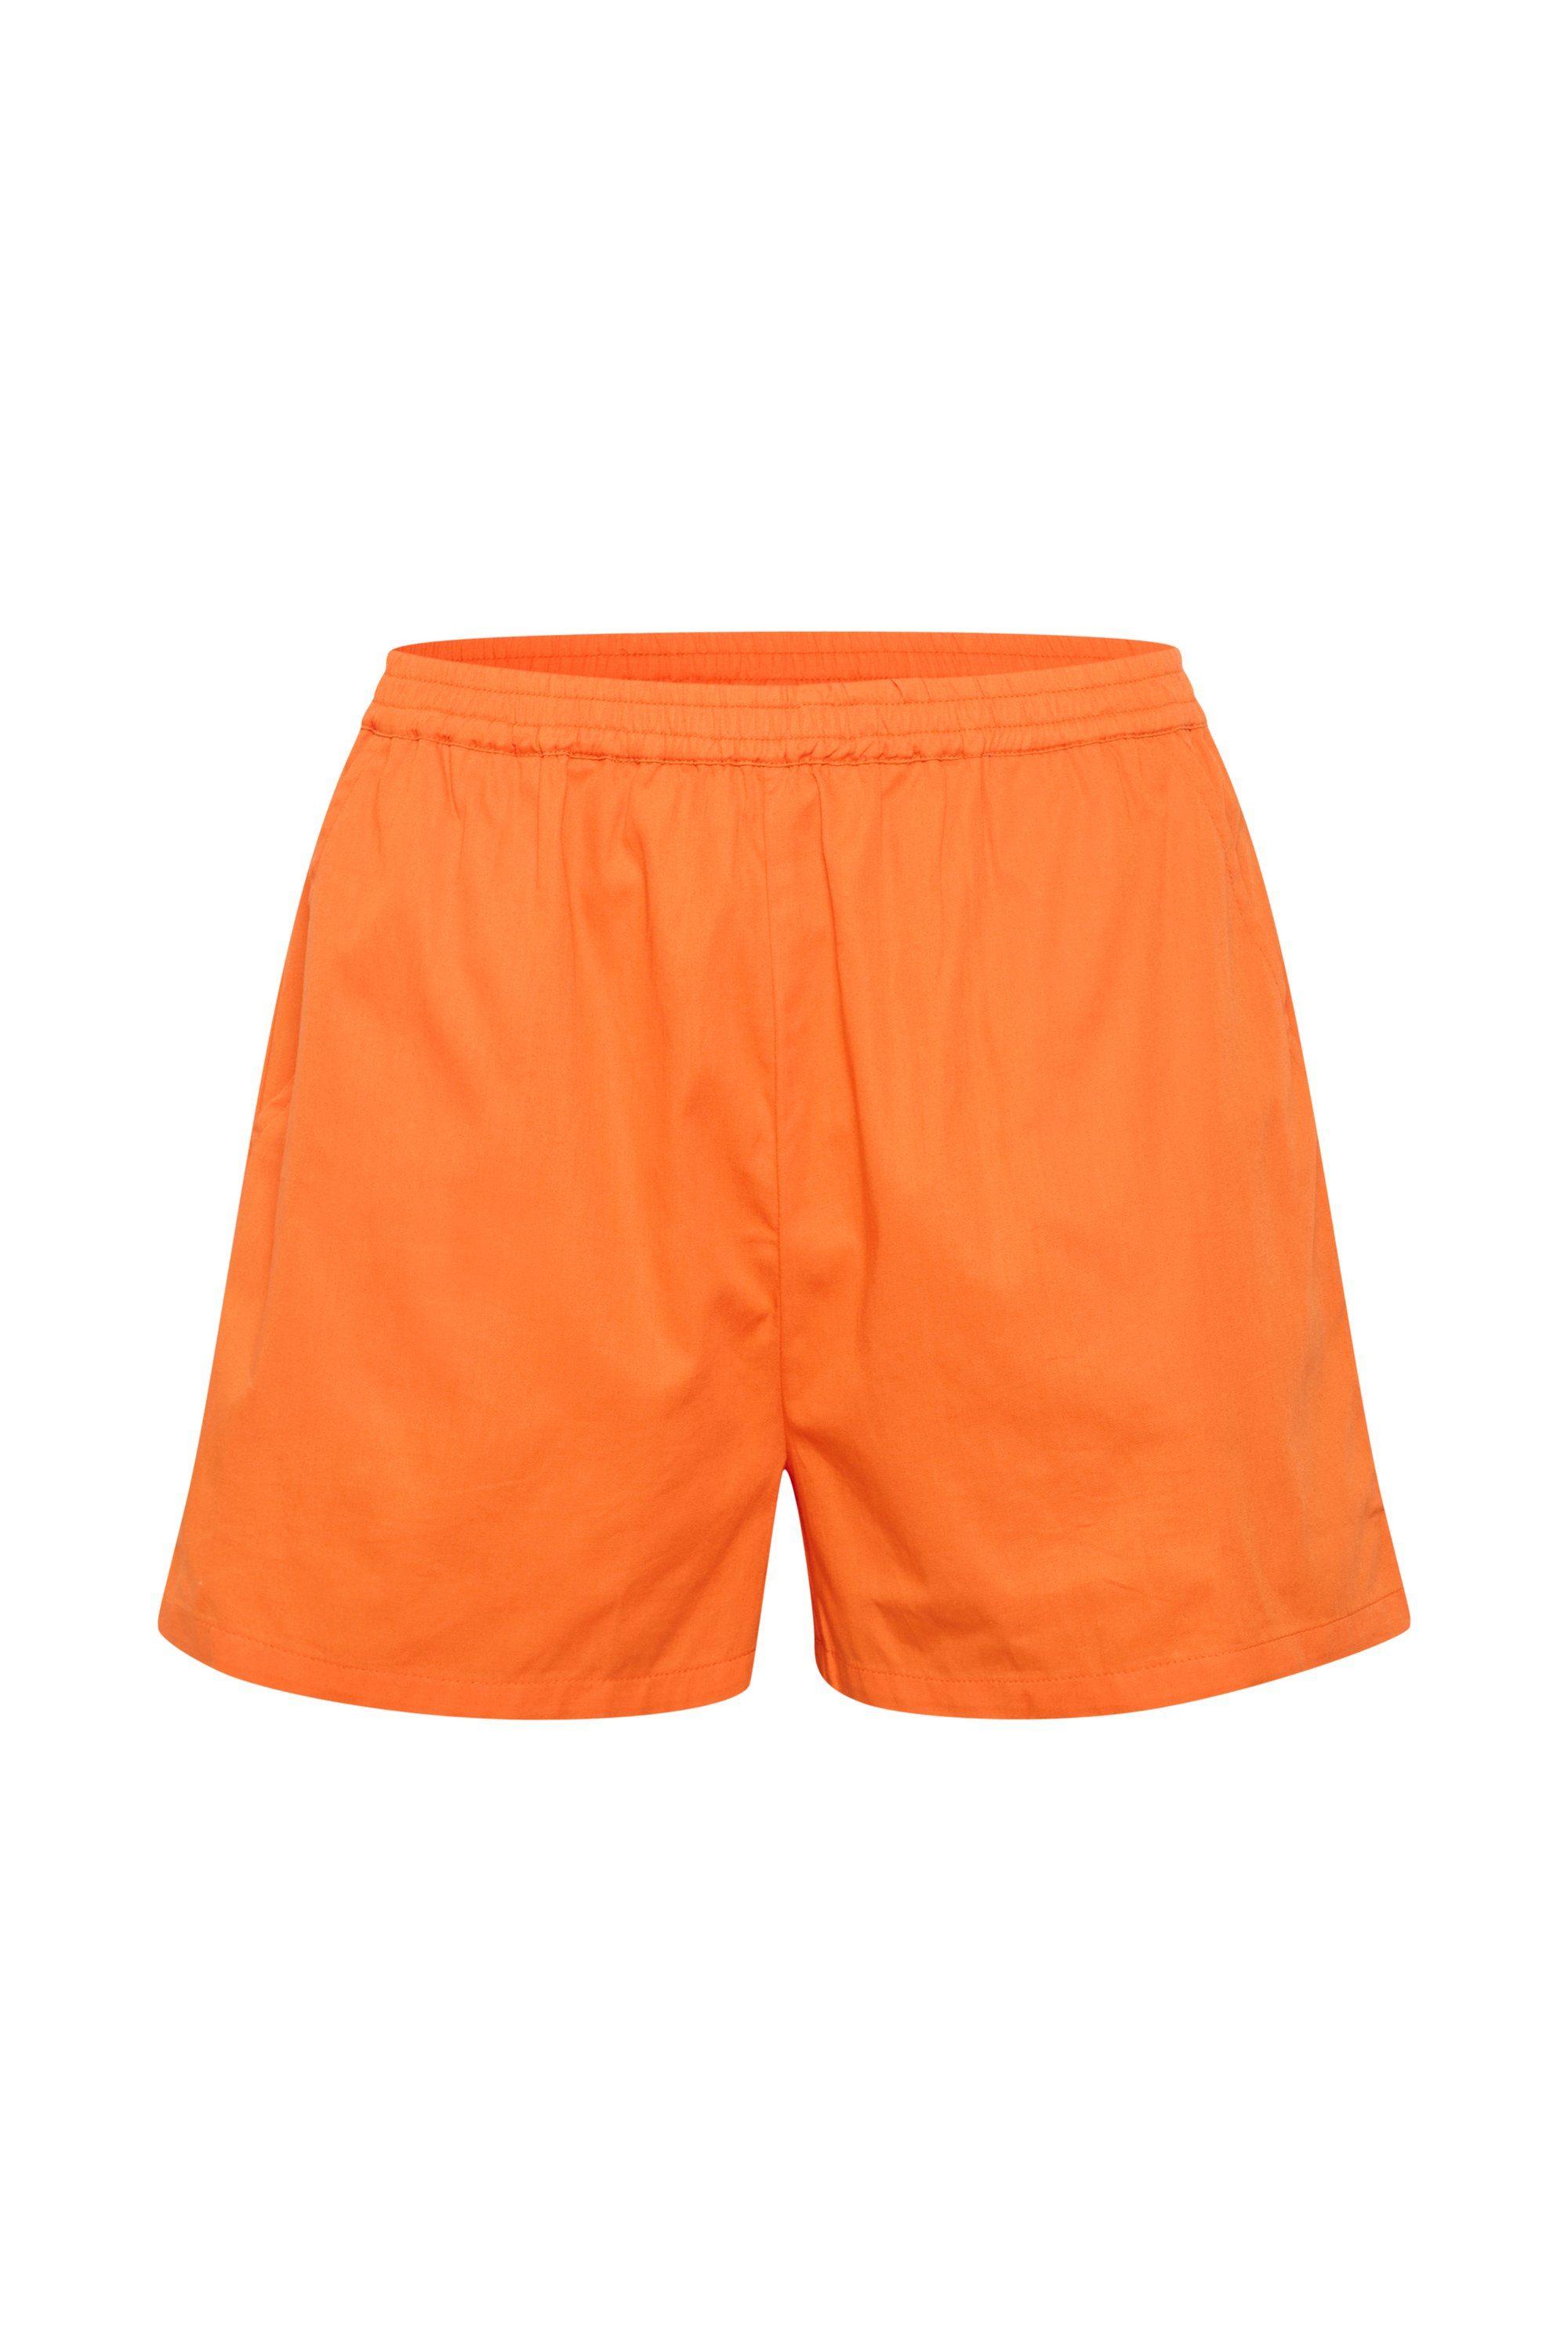 Saint Tropez Shorts Peel Shorts UfloraSZ Orange